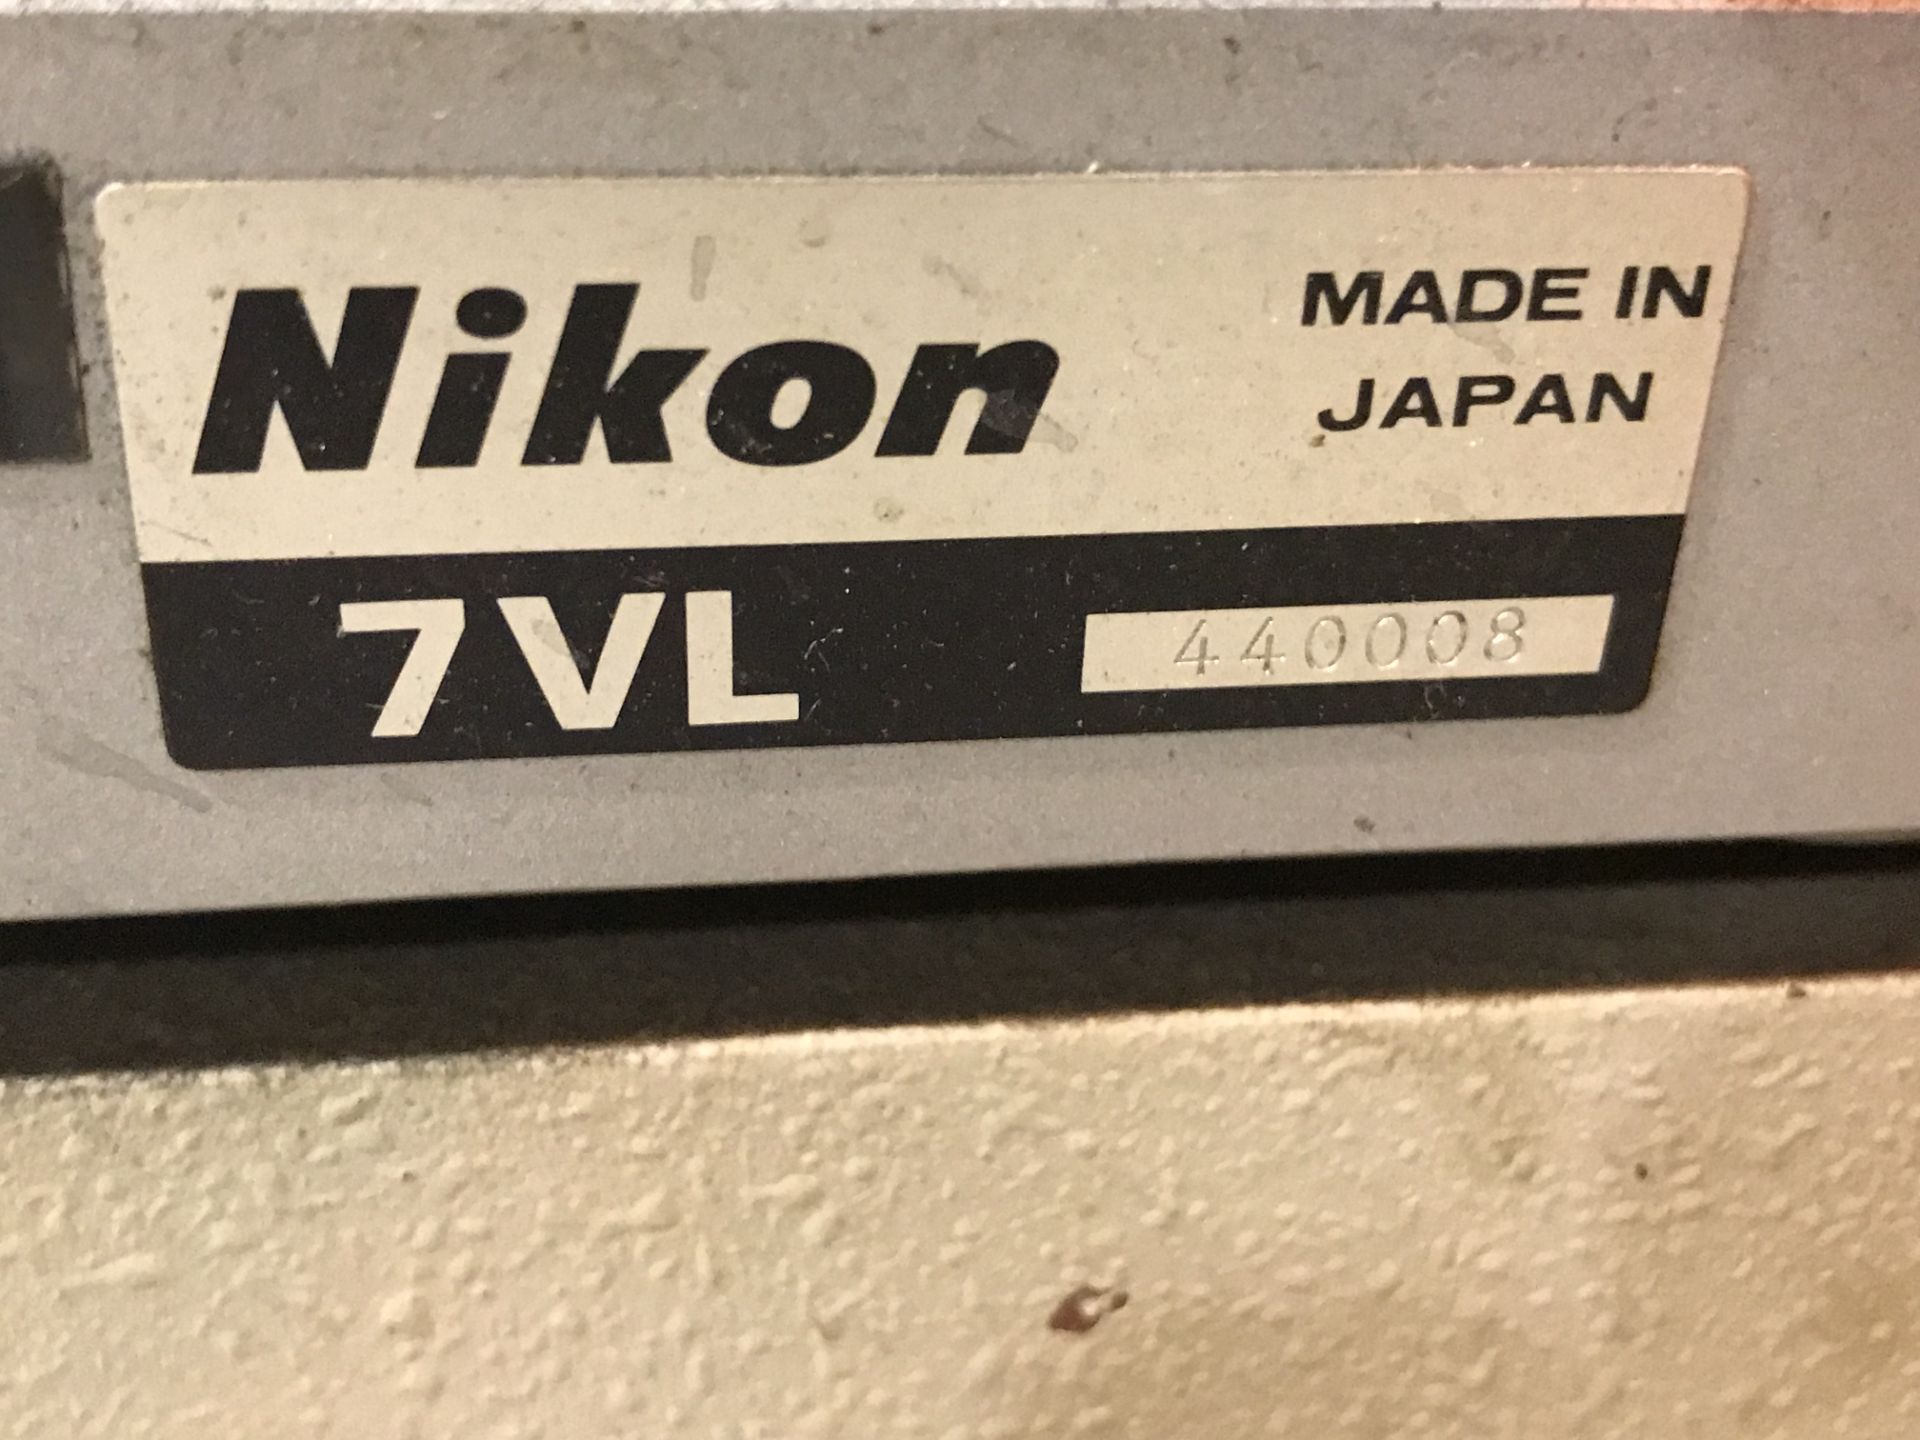 Nikon V-16E Profile Projector w/ Nikon 7VL Slide, s/n 440008 - Image 4 of 4